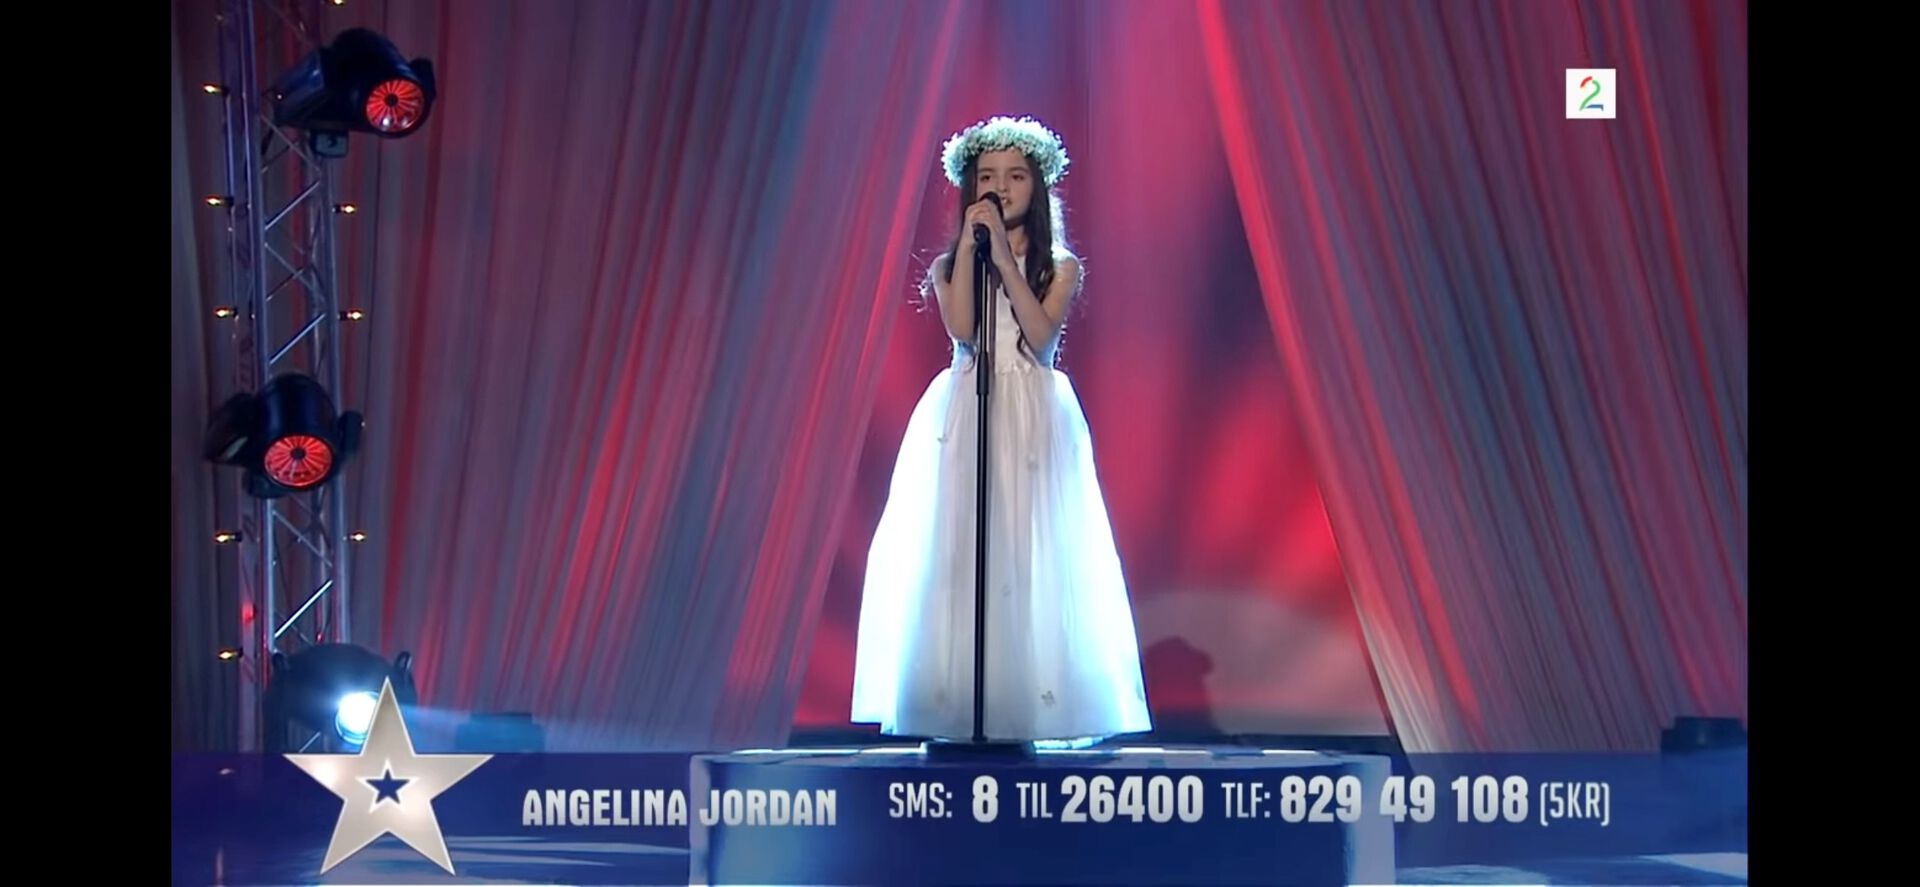 Angelina Jordan på scenen